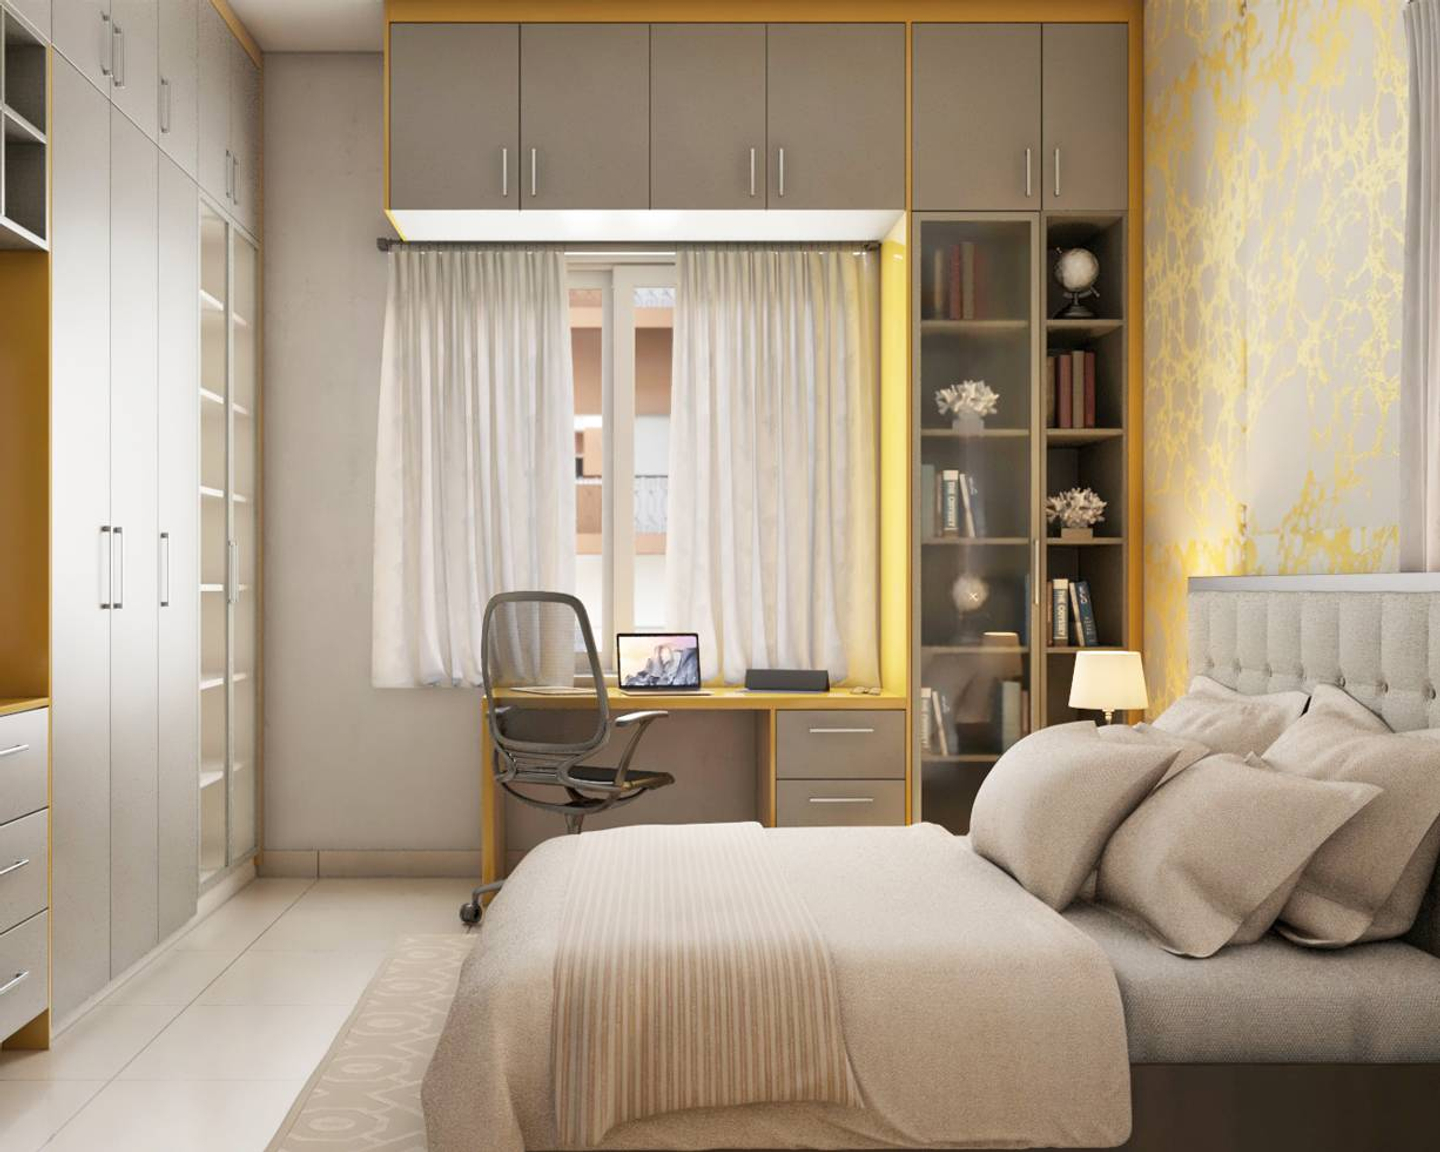 Spacious Master Bedroom Design - Livspace